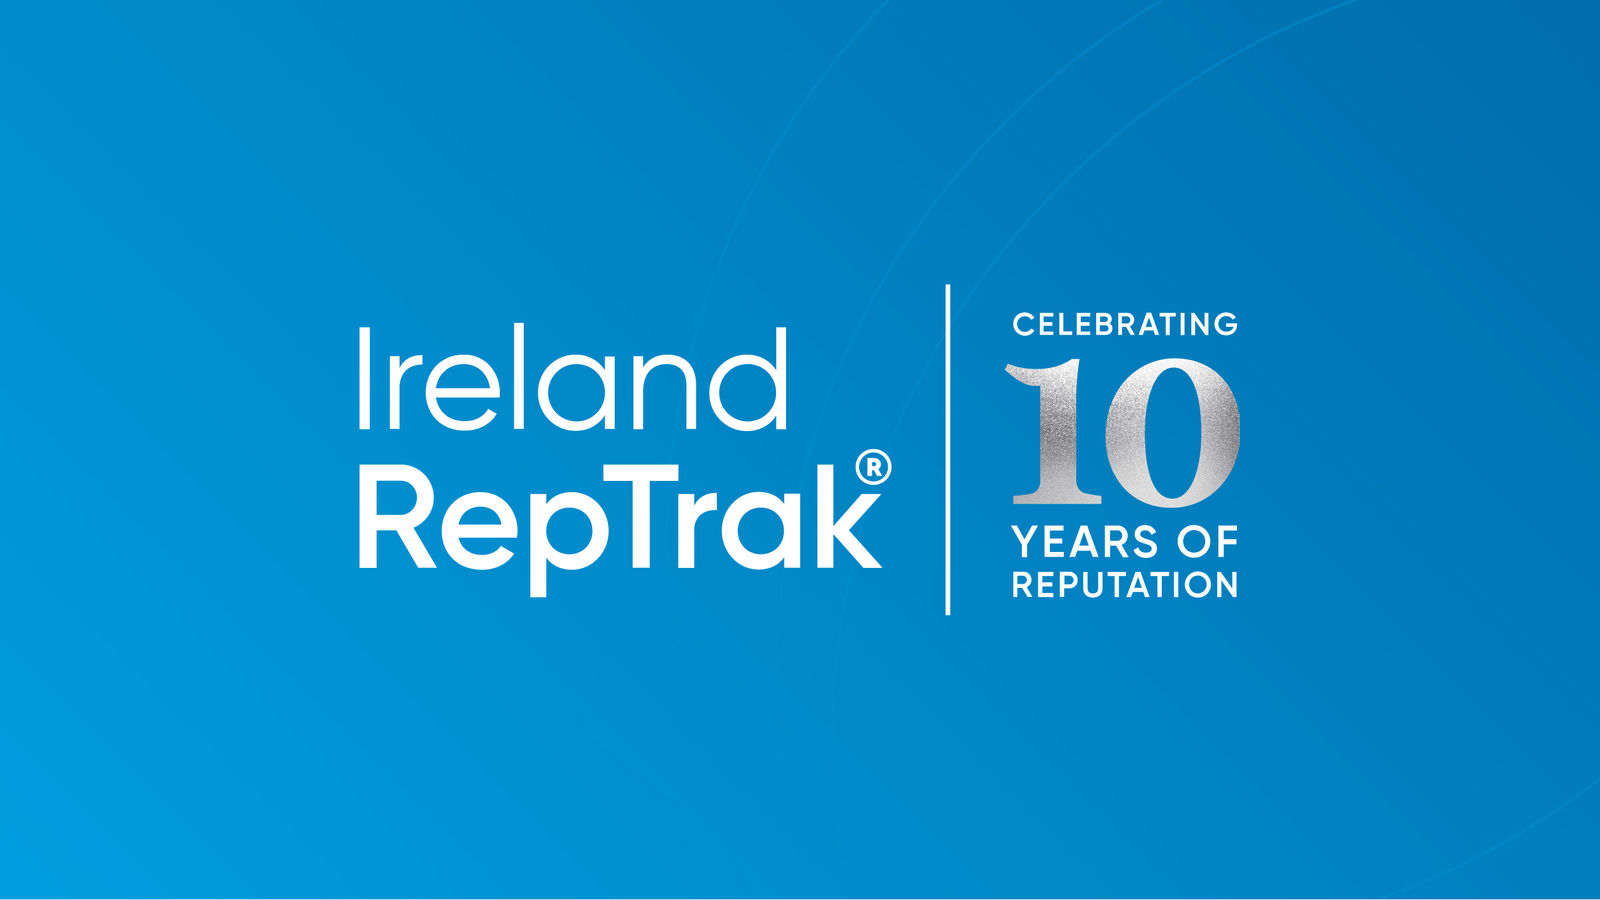 Ireland RepTrak 10 celebrating Years